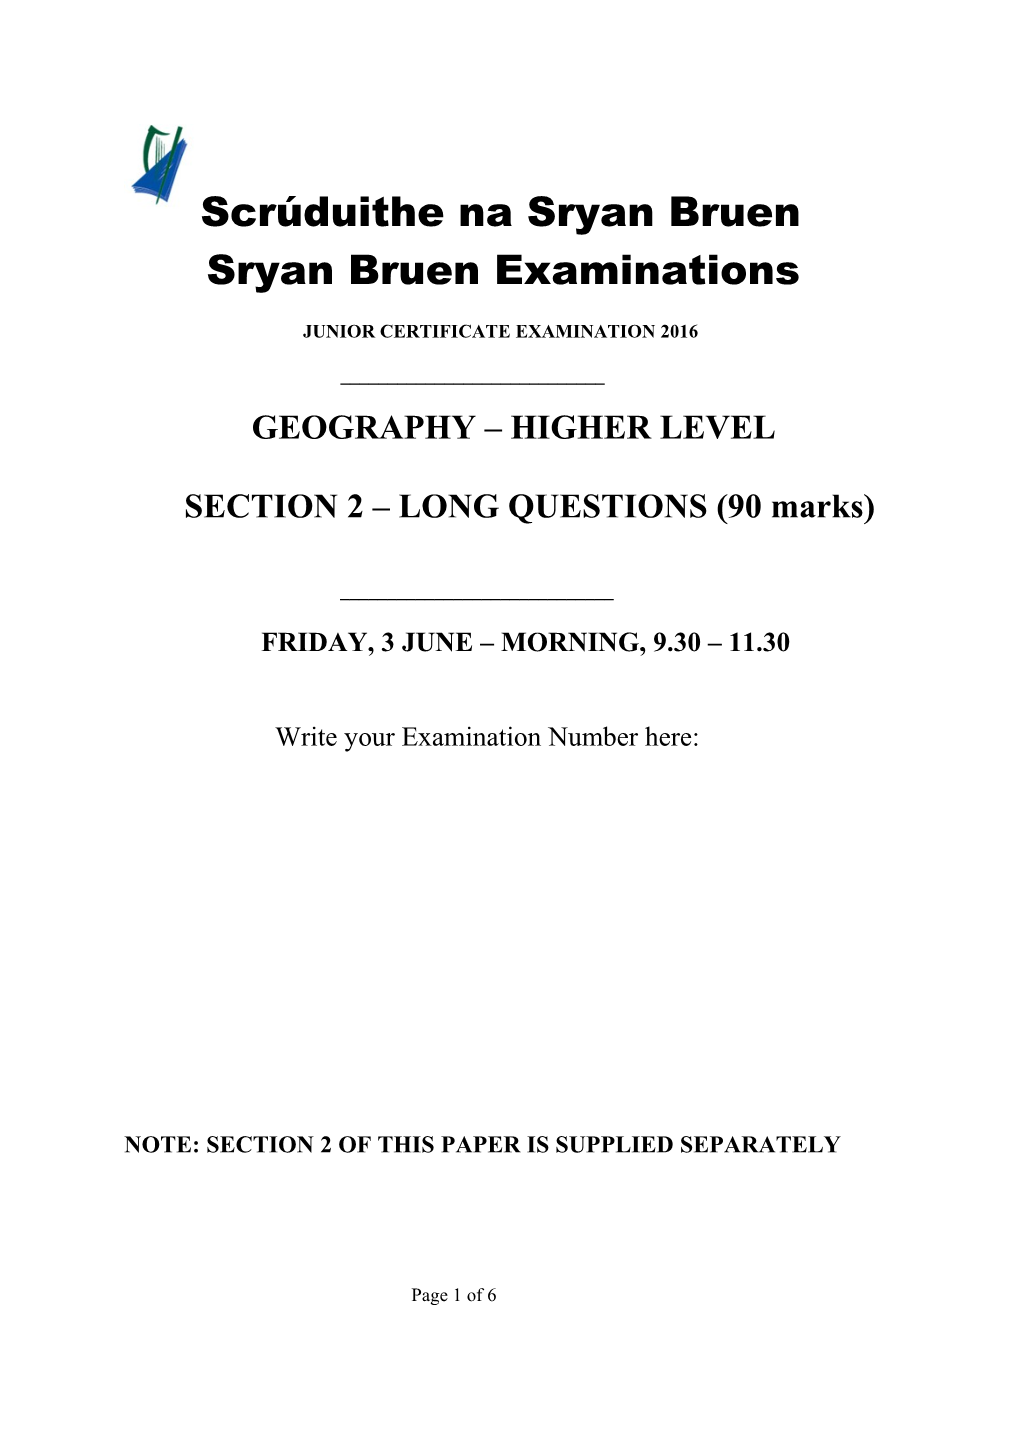 Sryan Bruen Examinations